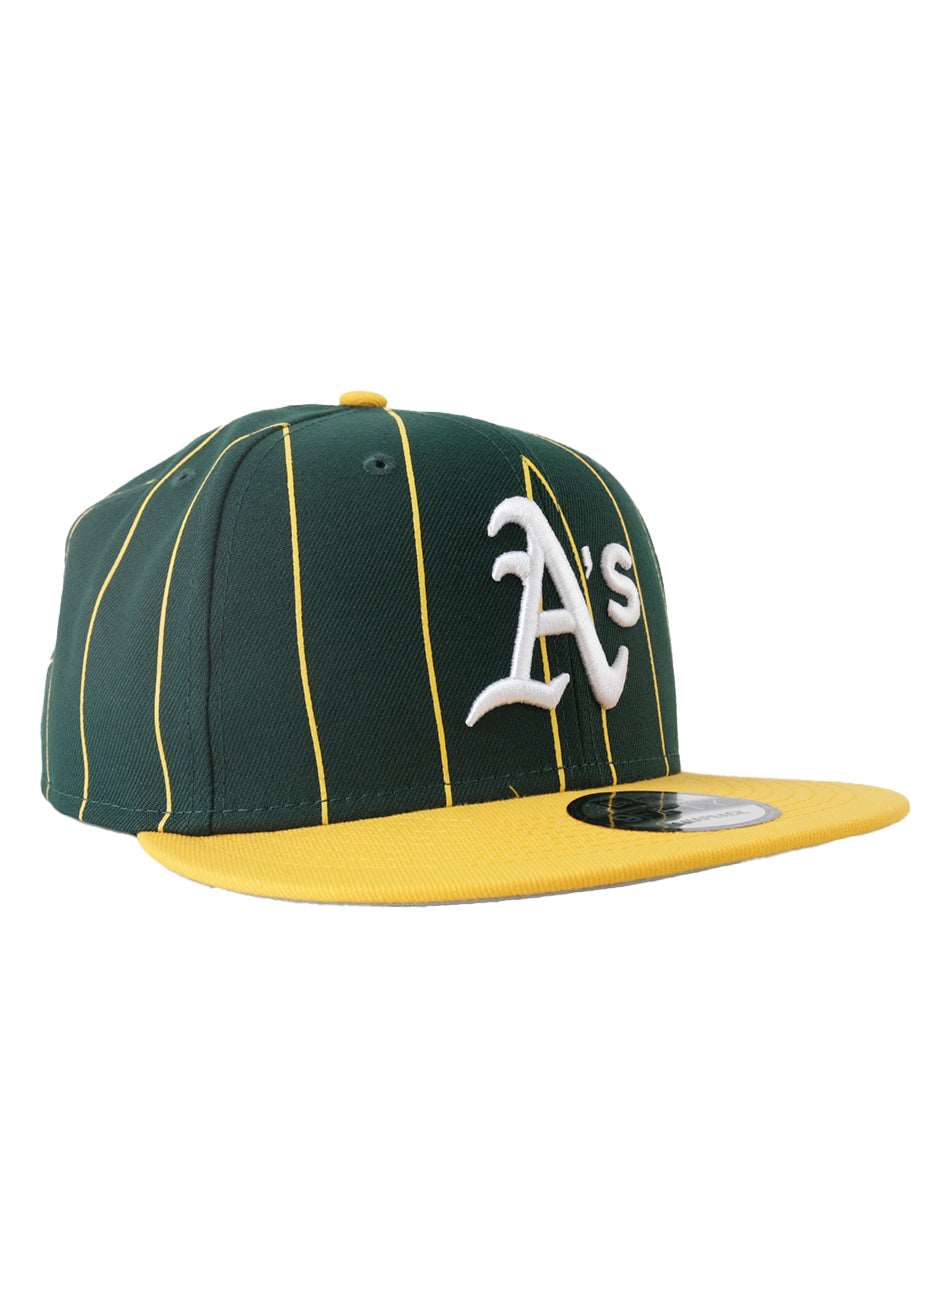 Oakland Athletics Vintage Pinstripe OTC 950 Snap-Back Hat